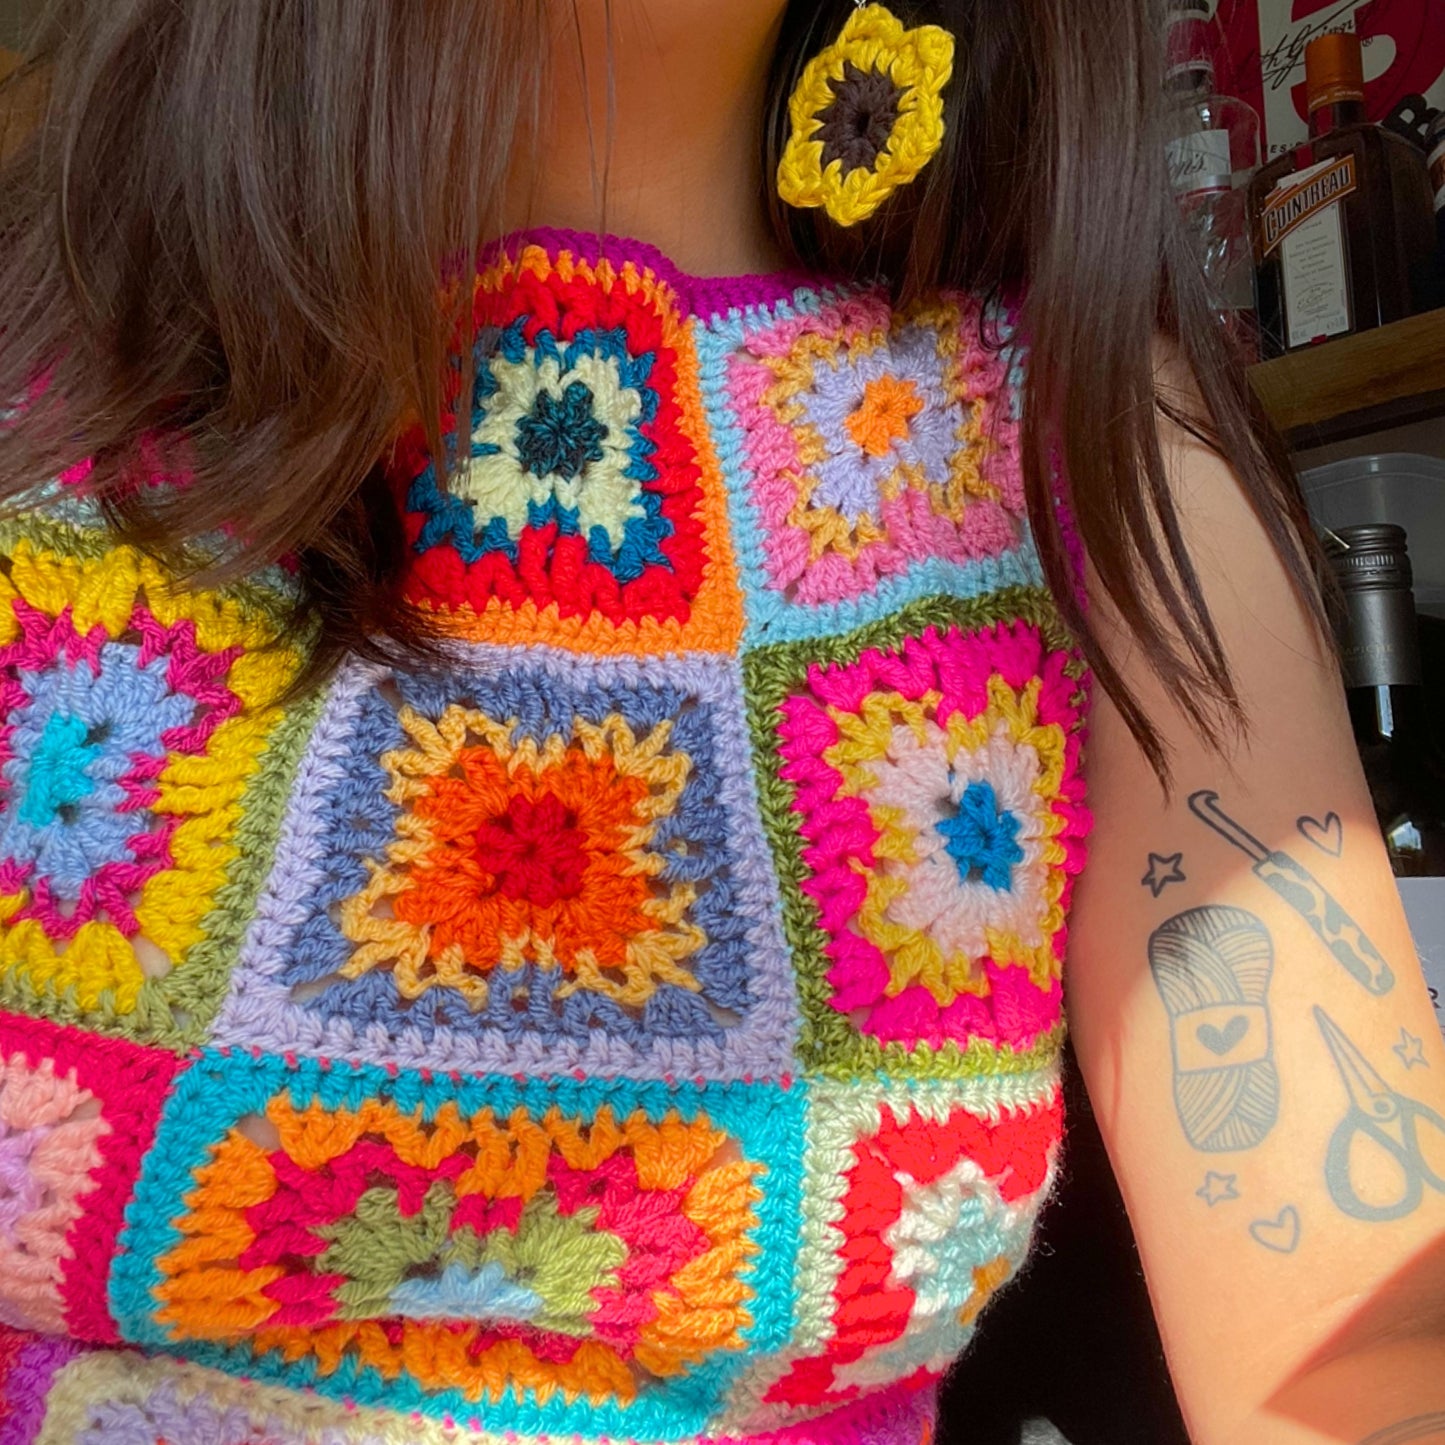 Rainbow Patchwork Crochet Top - M/L